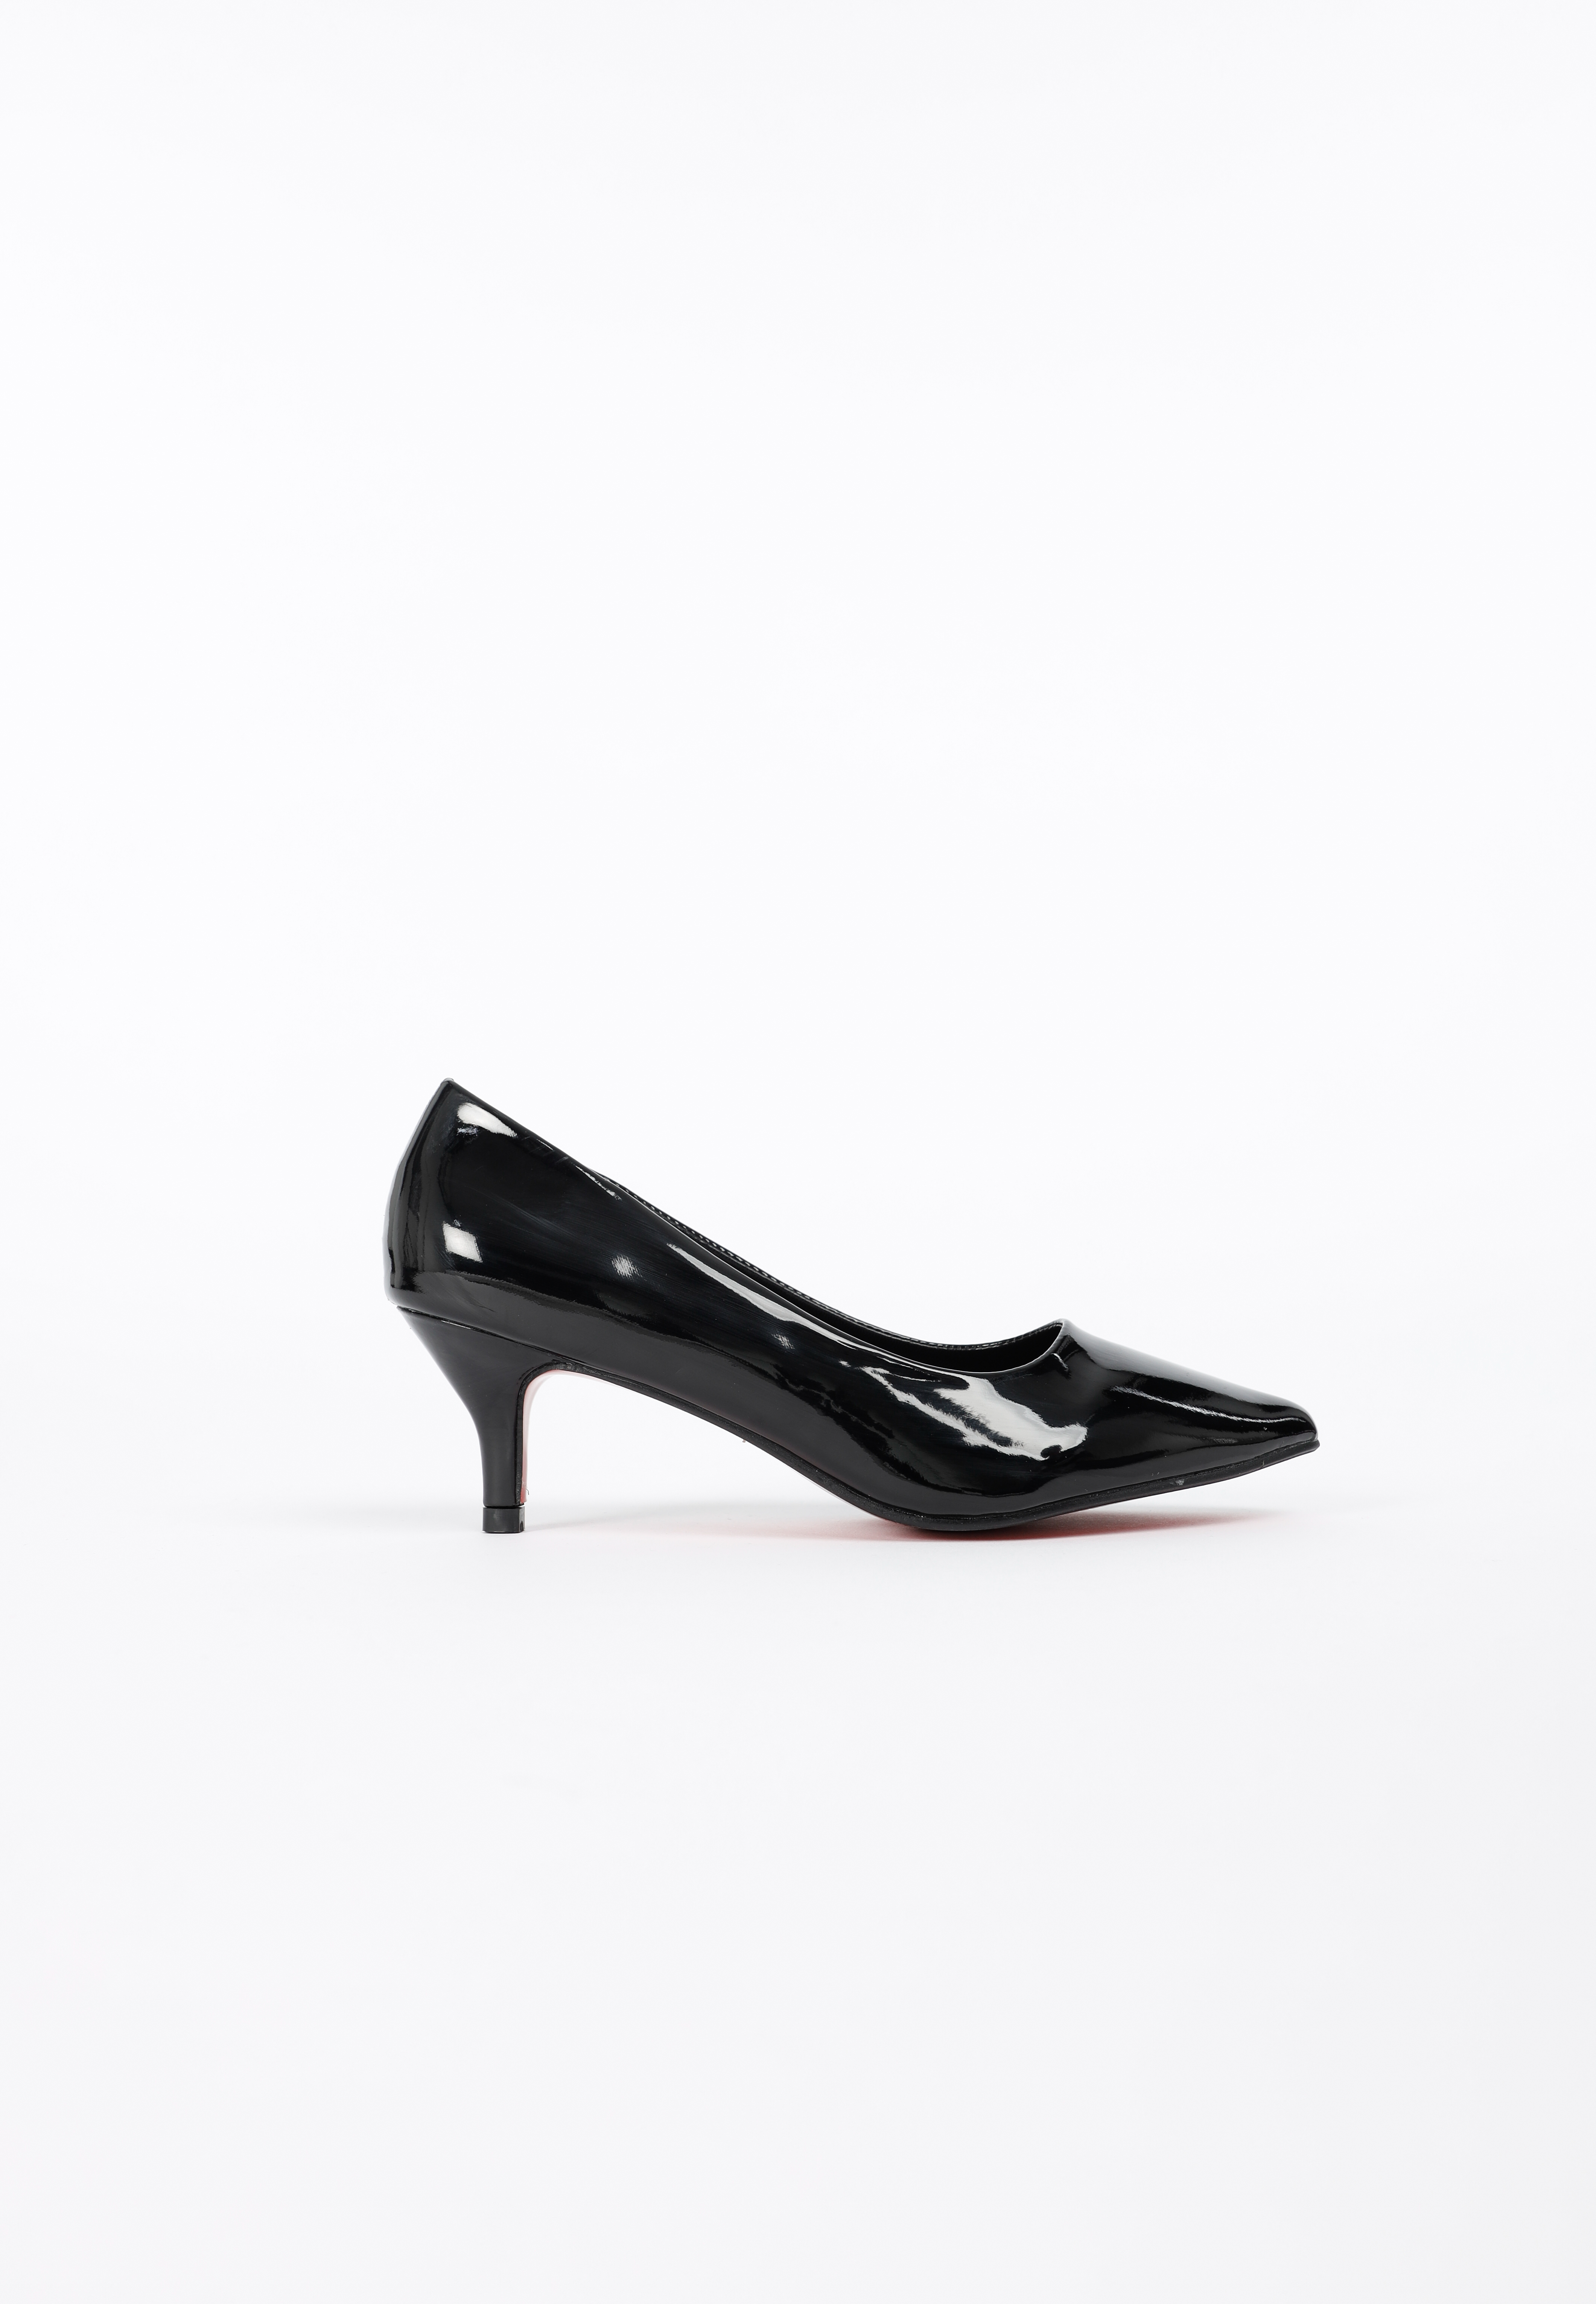 black patent low heels